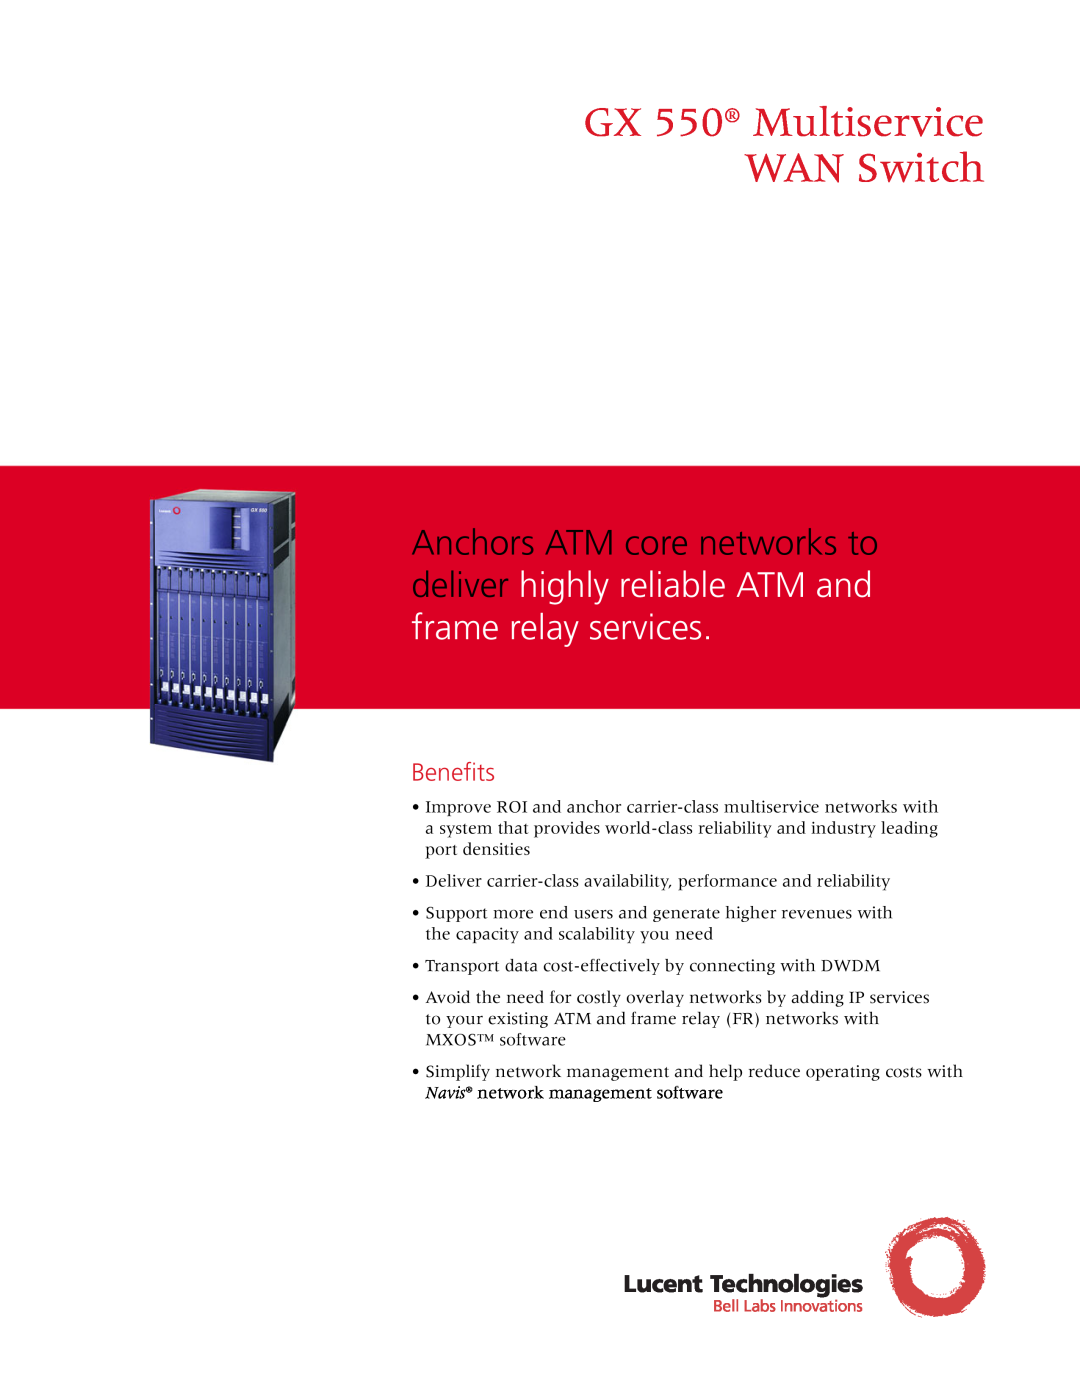 Lucent Technologies manual Benefits, GX 550 Multiservice WAN Switch 